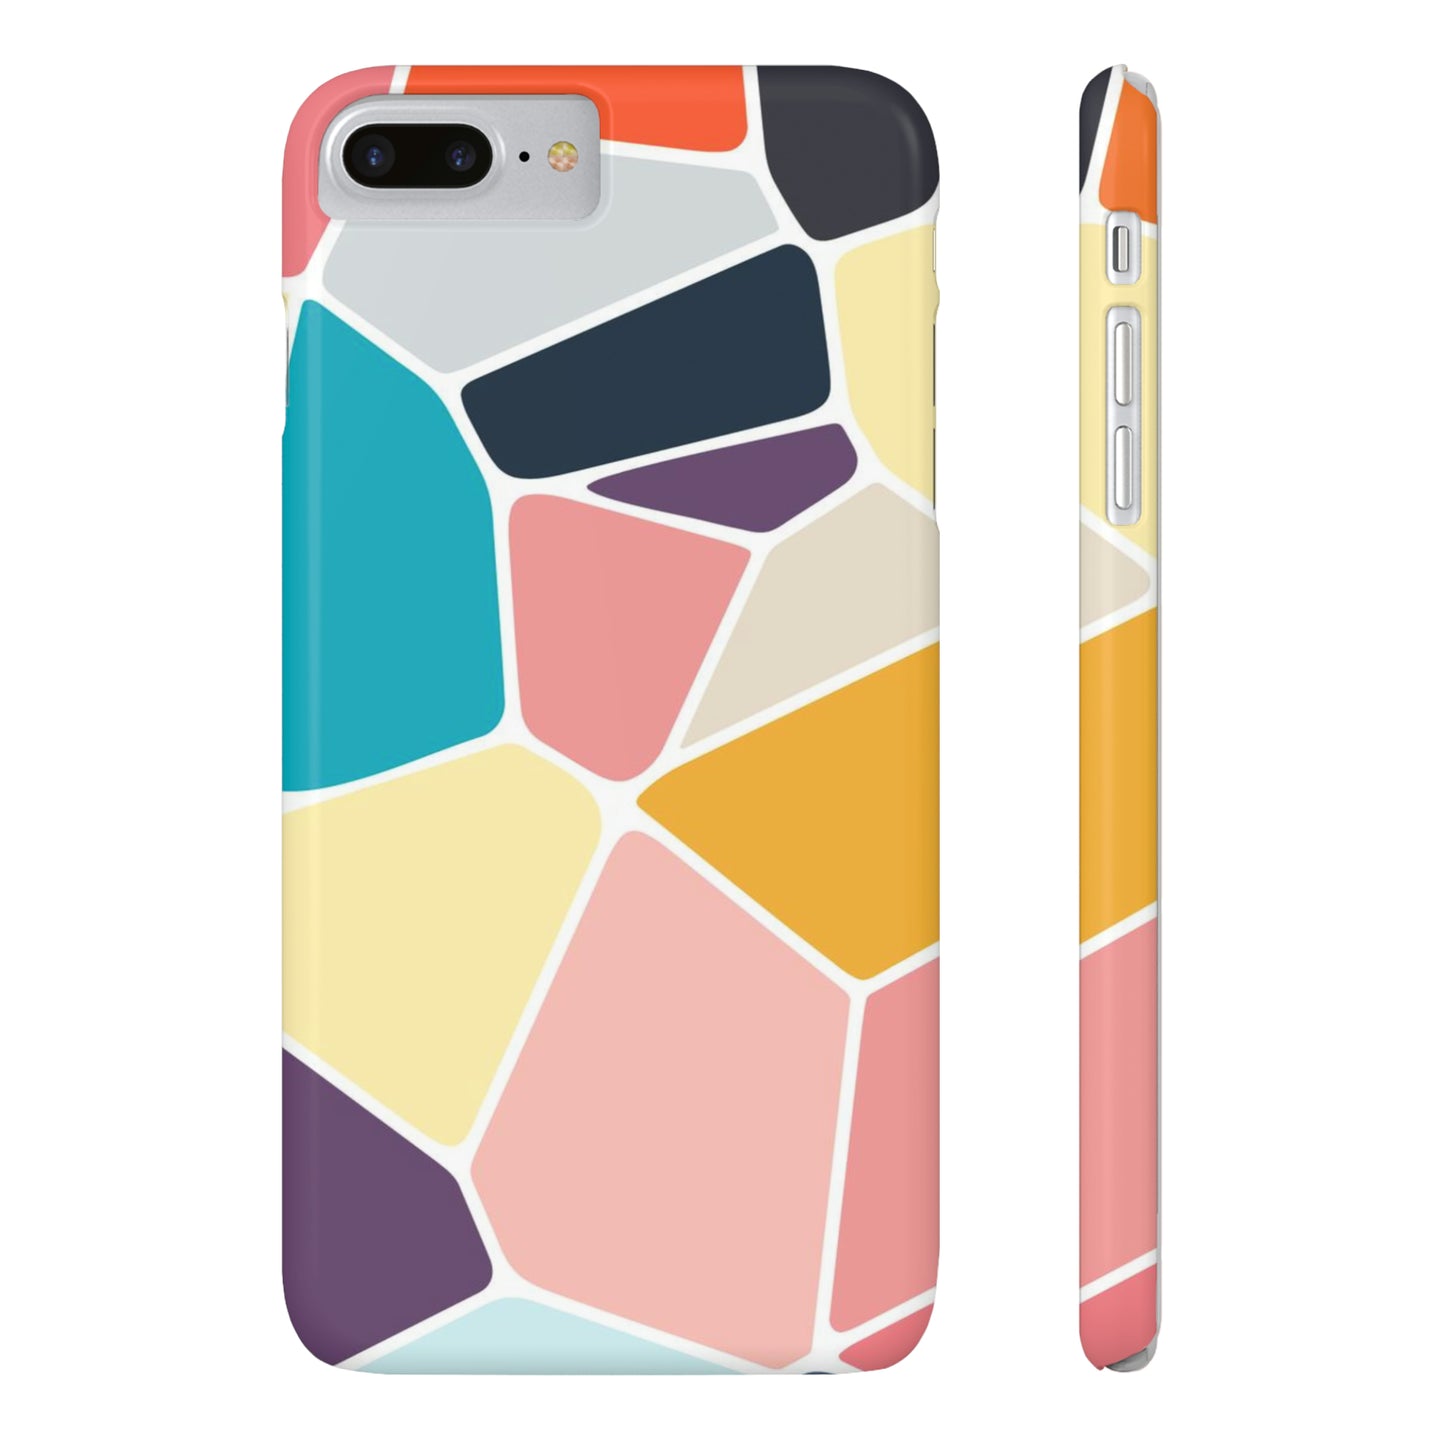 Mosaic fashion iPhone case